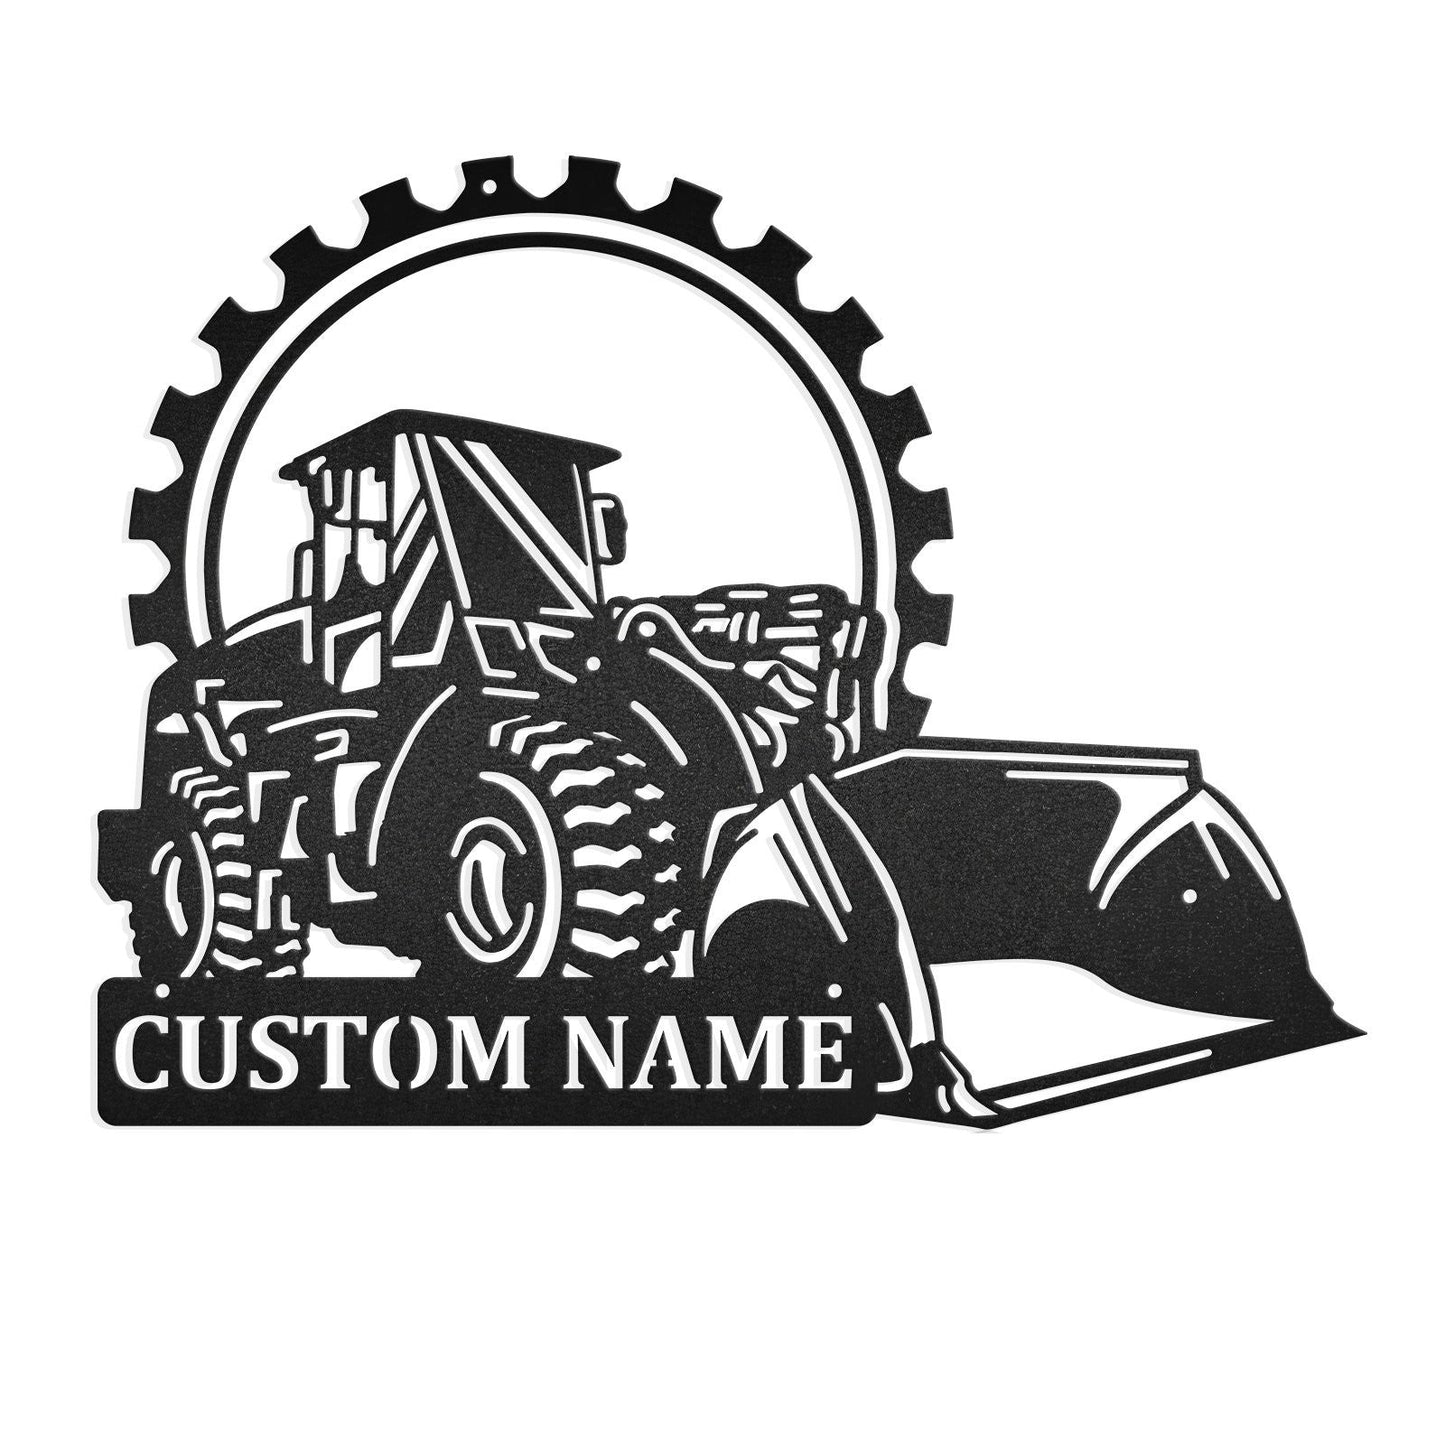 Personalized Bulldozer Construction Vehicle Metal Art - Custom Bulldozer Vehicle Metal Sign - Metal Decor Wall Art